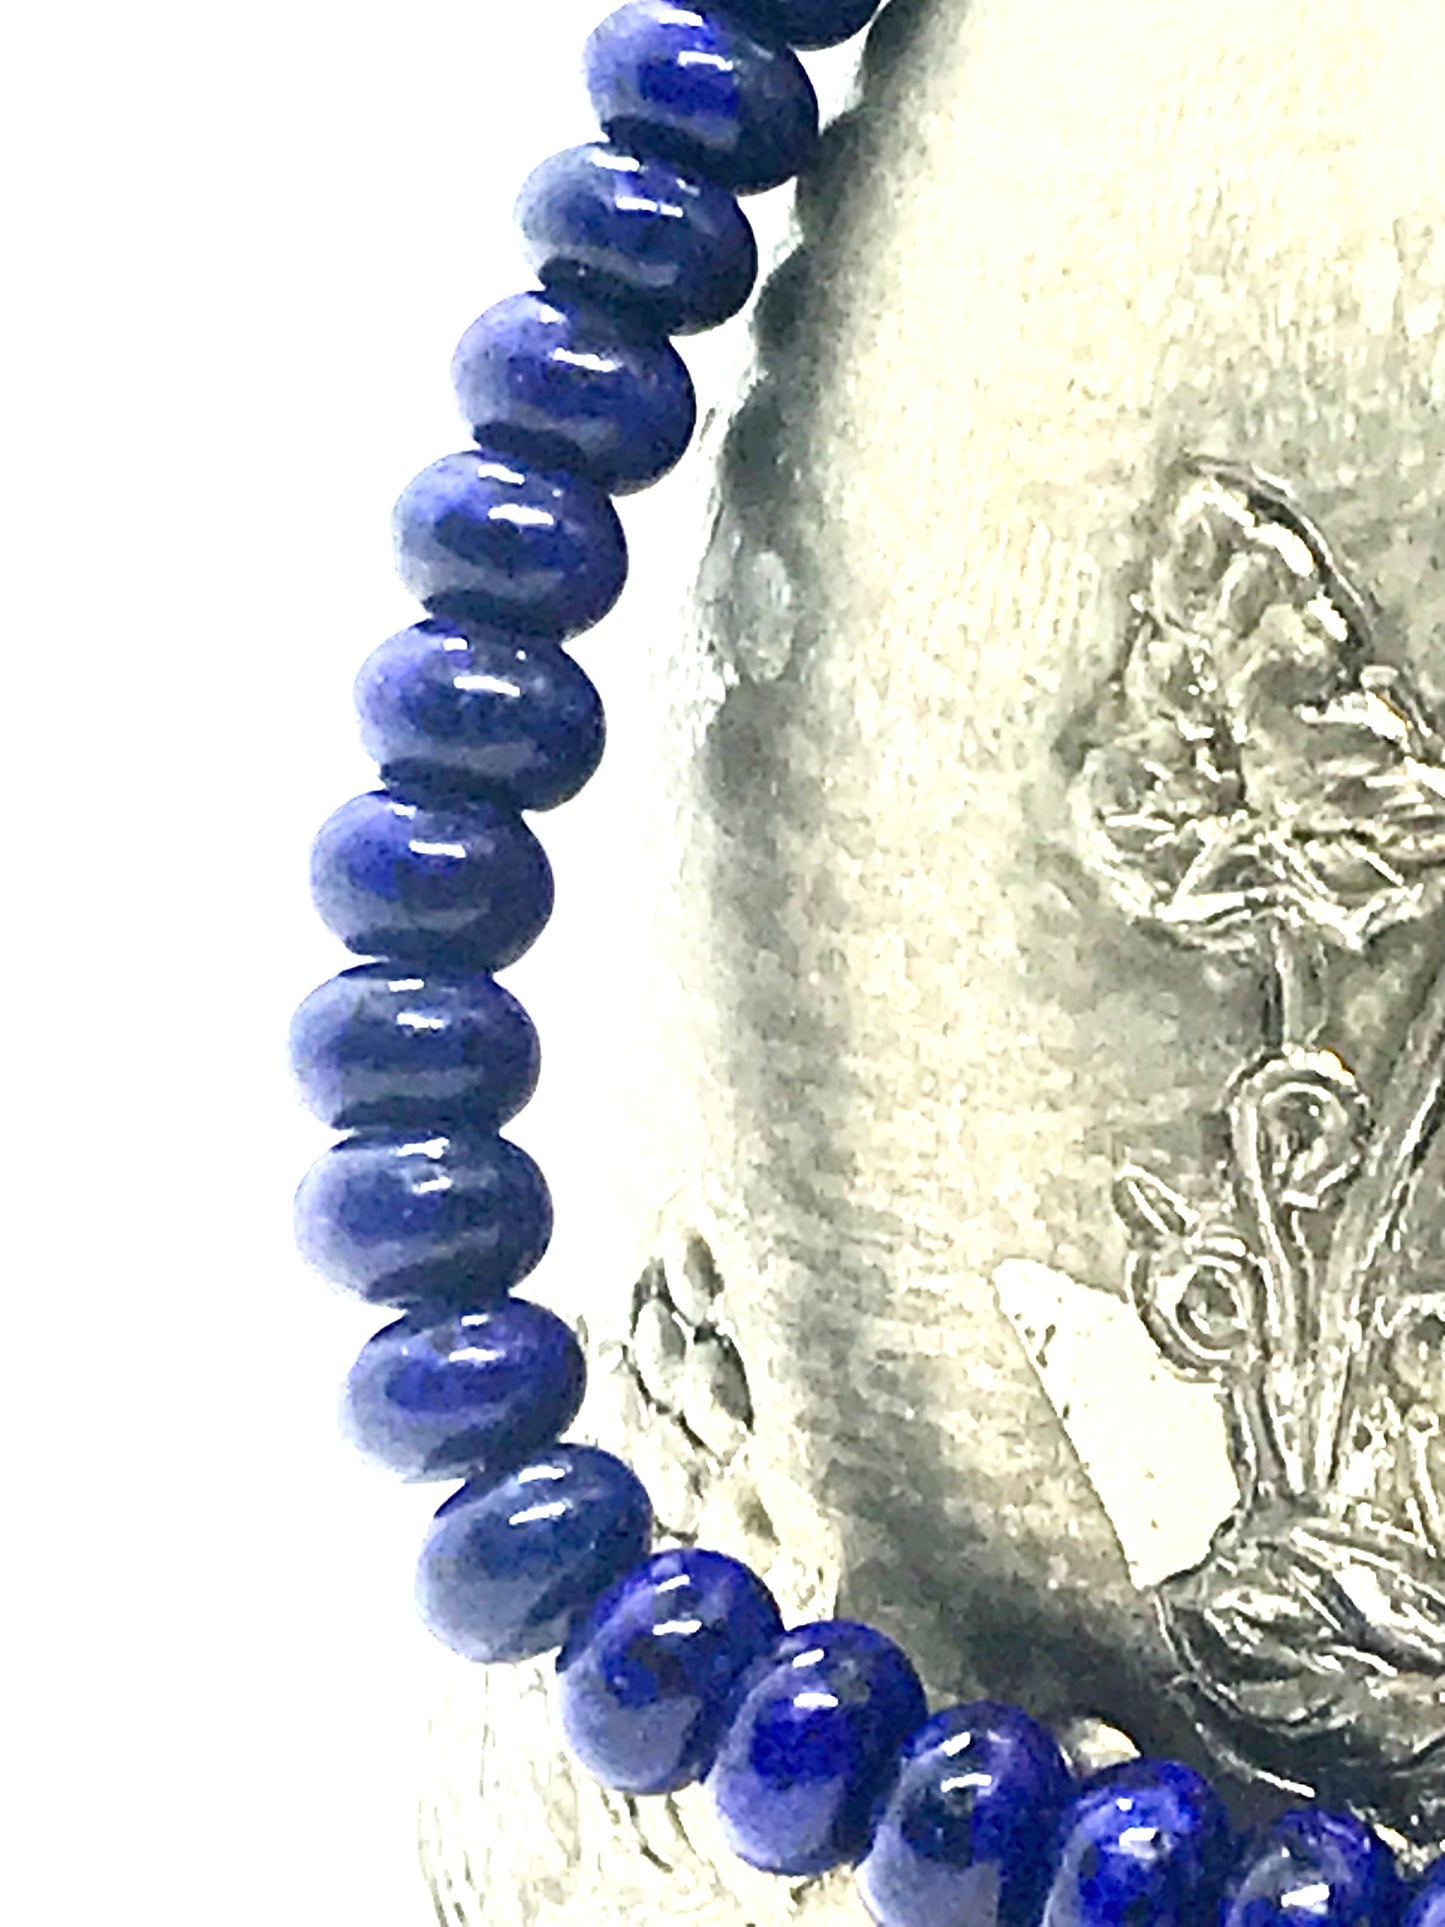 Lapiz Lazuli Mens or Woman's Bracelet  4-6mm beads